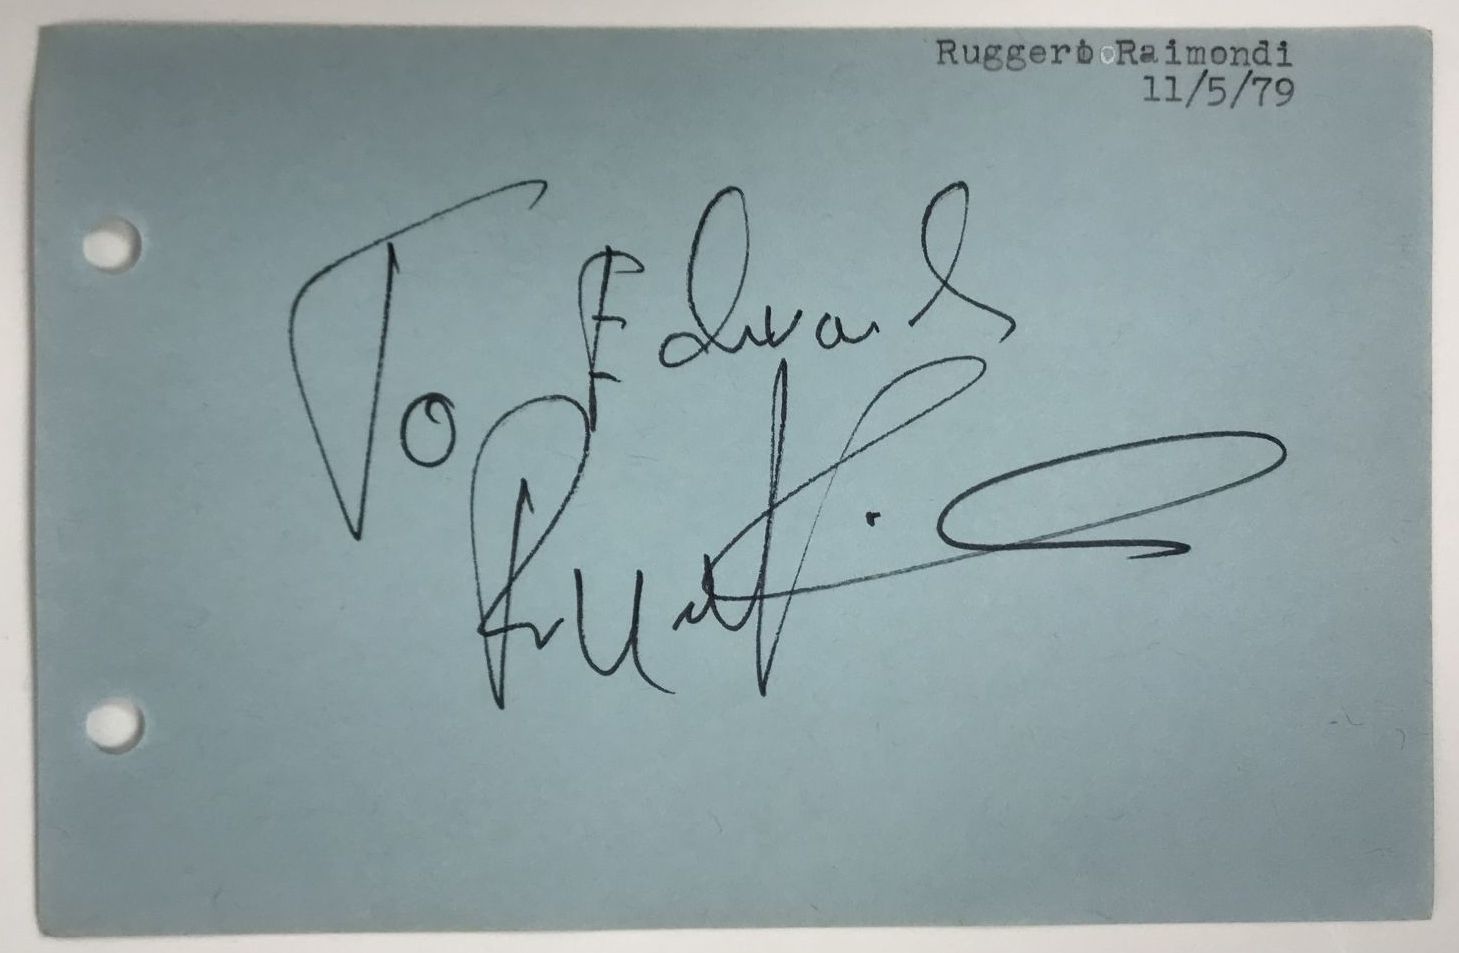 Primary image for Ruggero Raimondi Signed Autographed 4x6 Signature Page - Opera Legend